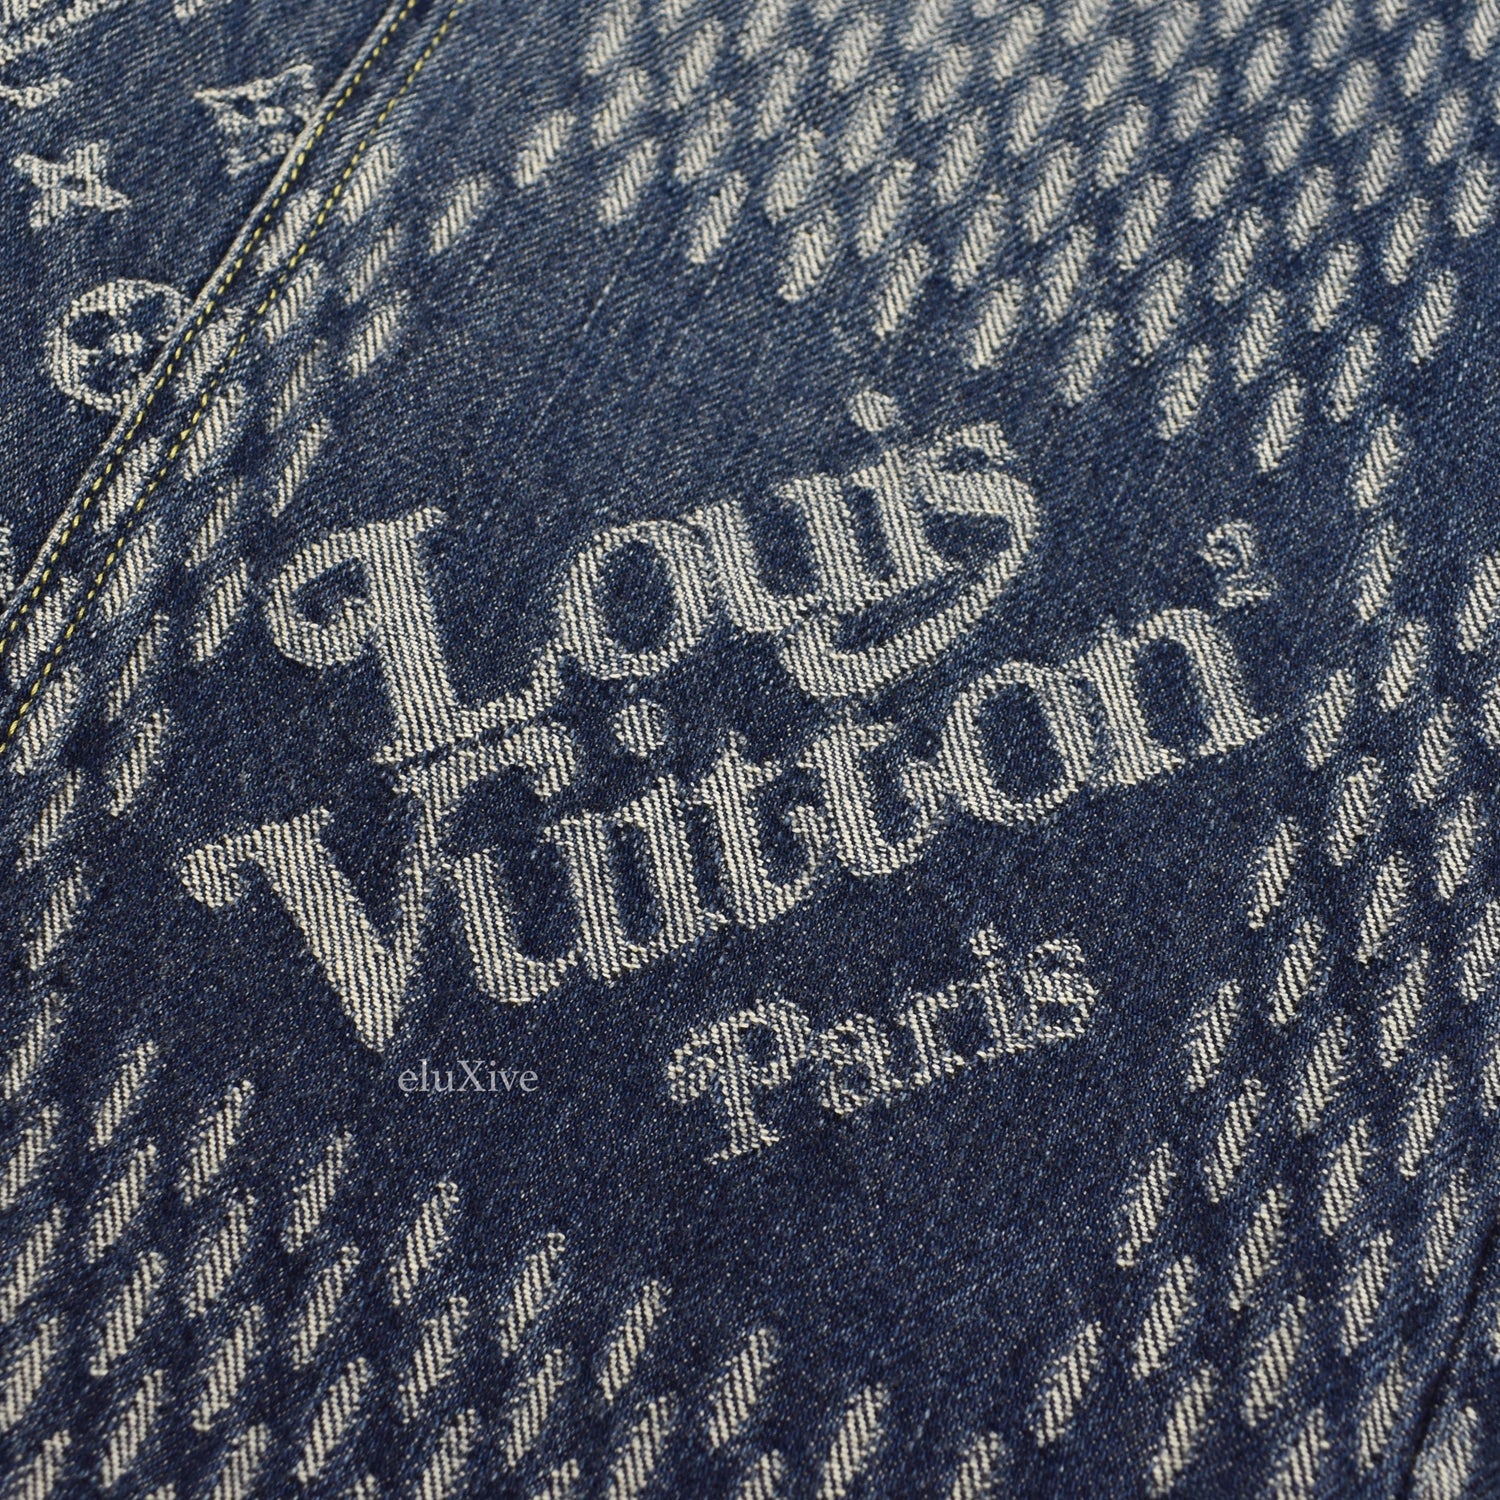 Louis Vuitton Louis Vuitton Bonnet Damier Giant Wave Monogram NIGO